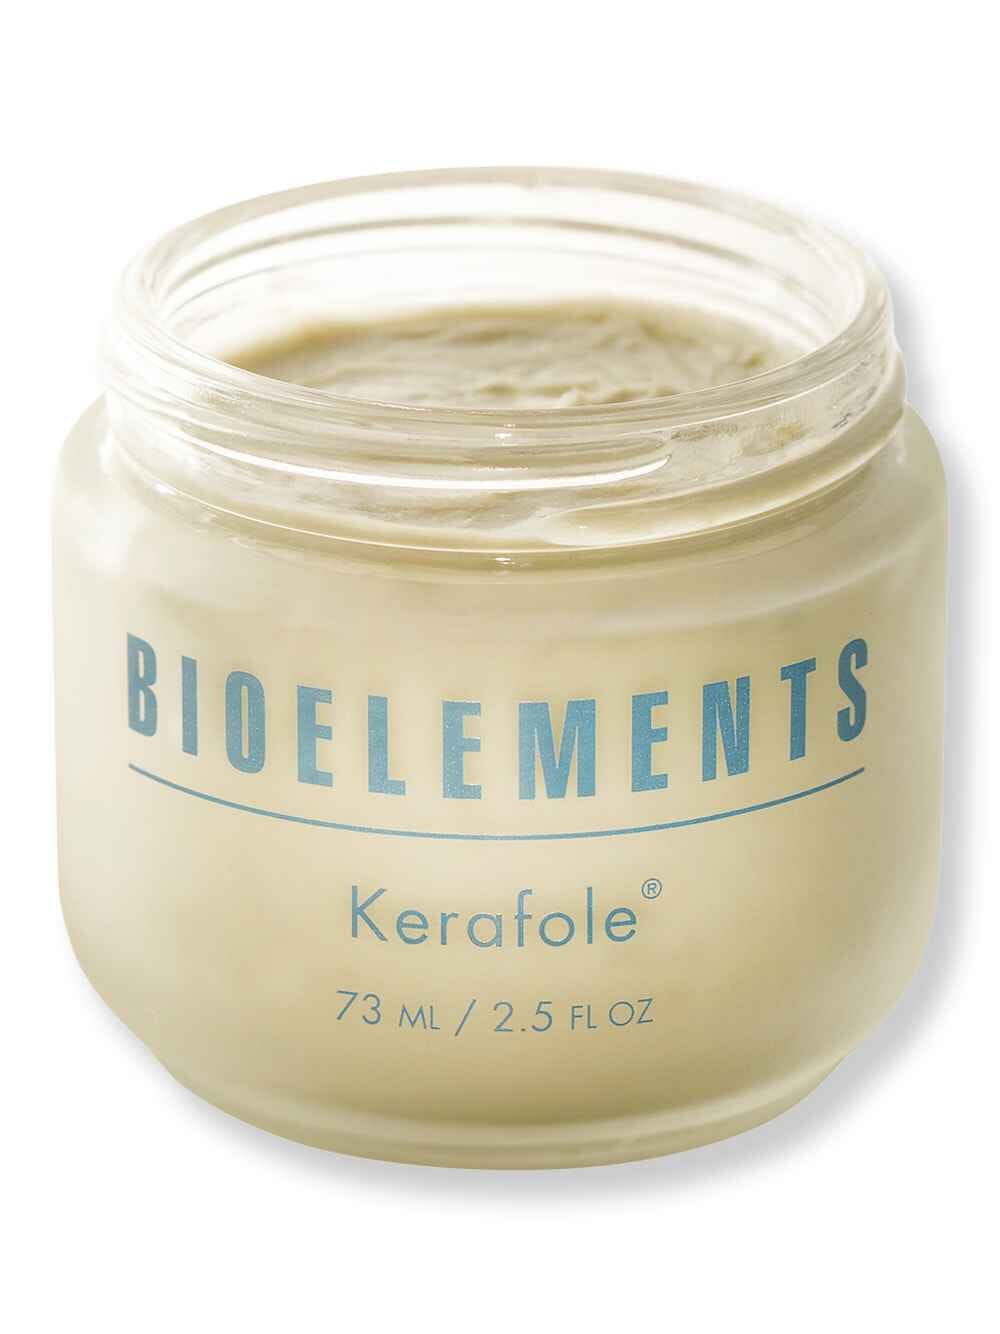 Bioelements Bioelements Kerafole 2.5 oz Face Masks 